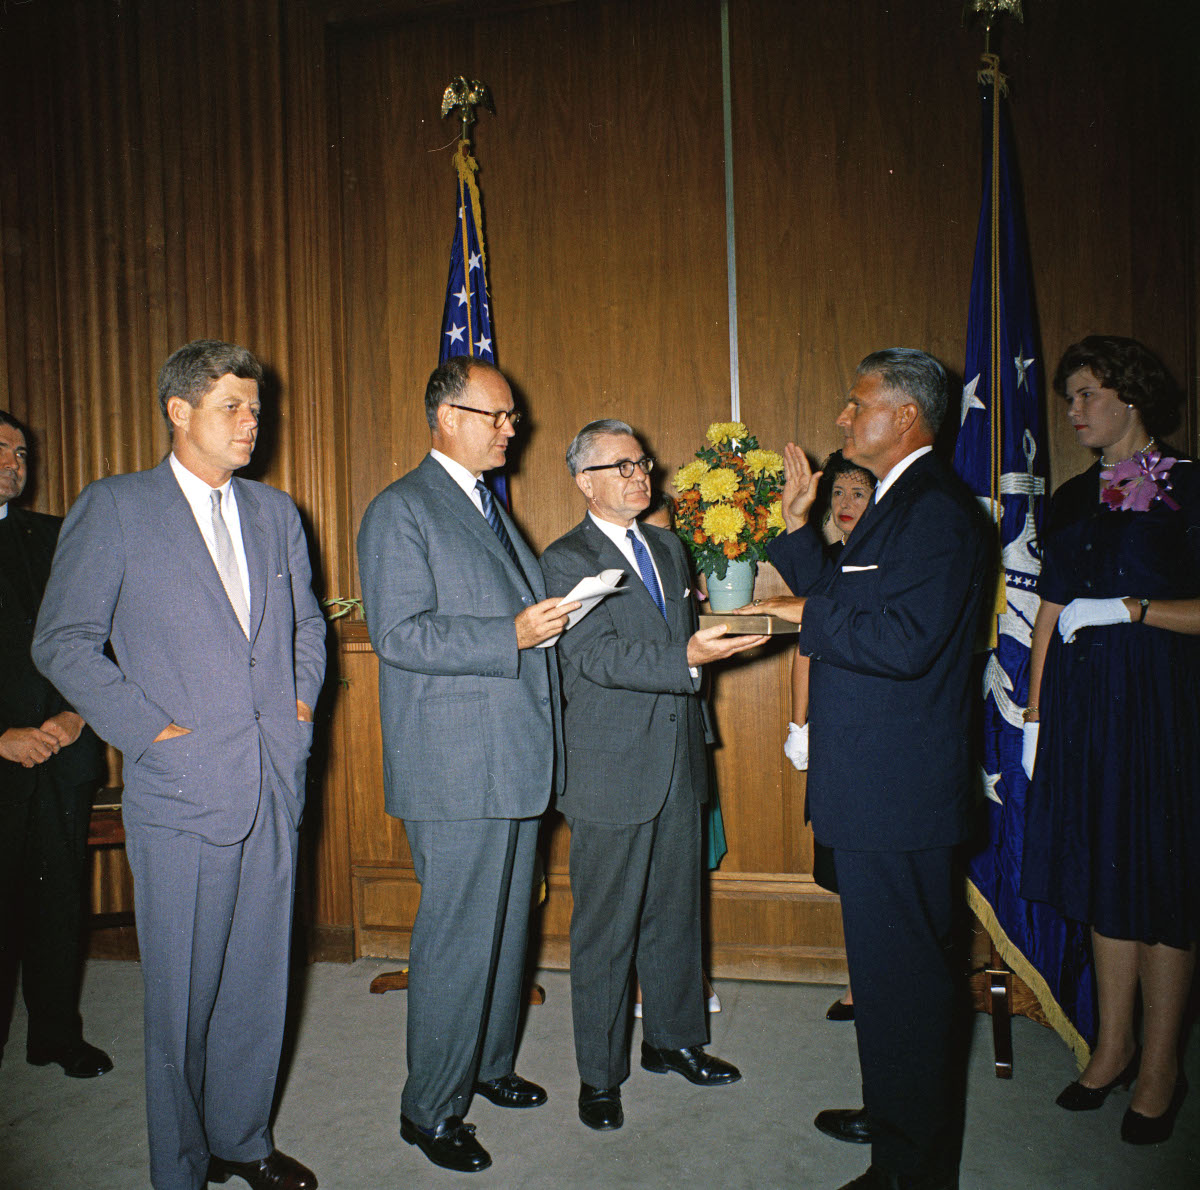 President John F. Kennedy attends the swearing-in of new Secret Service Director James J. Rowley